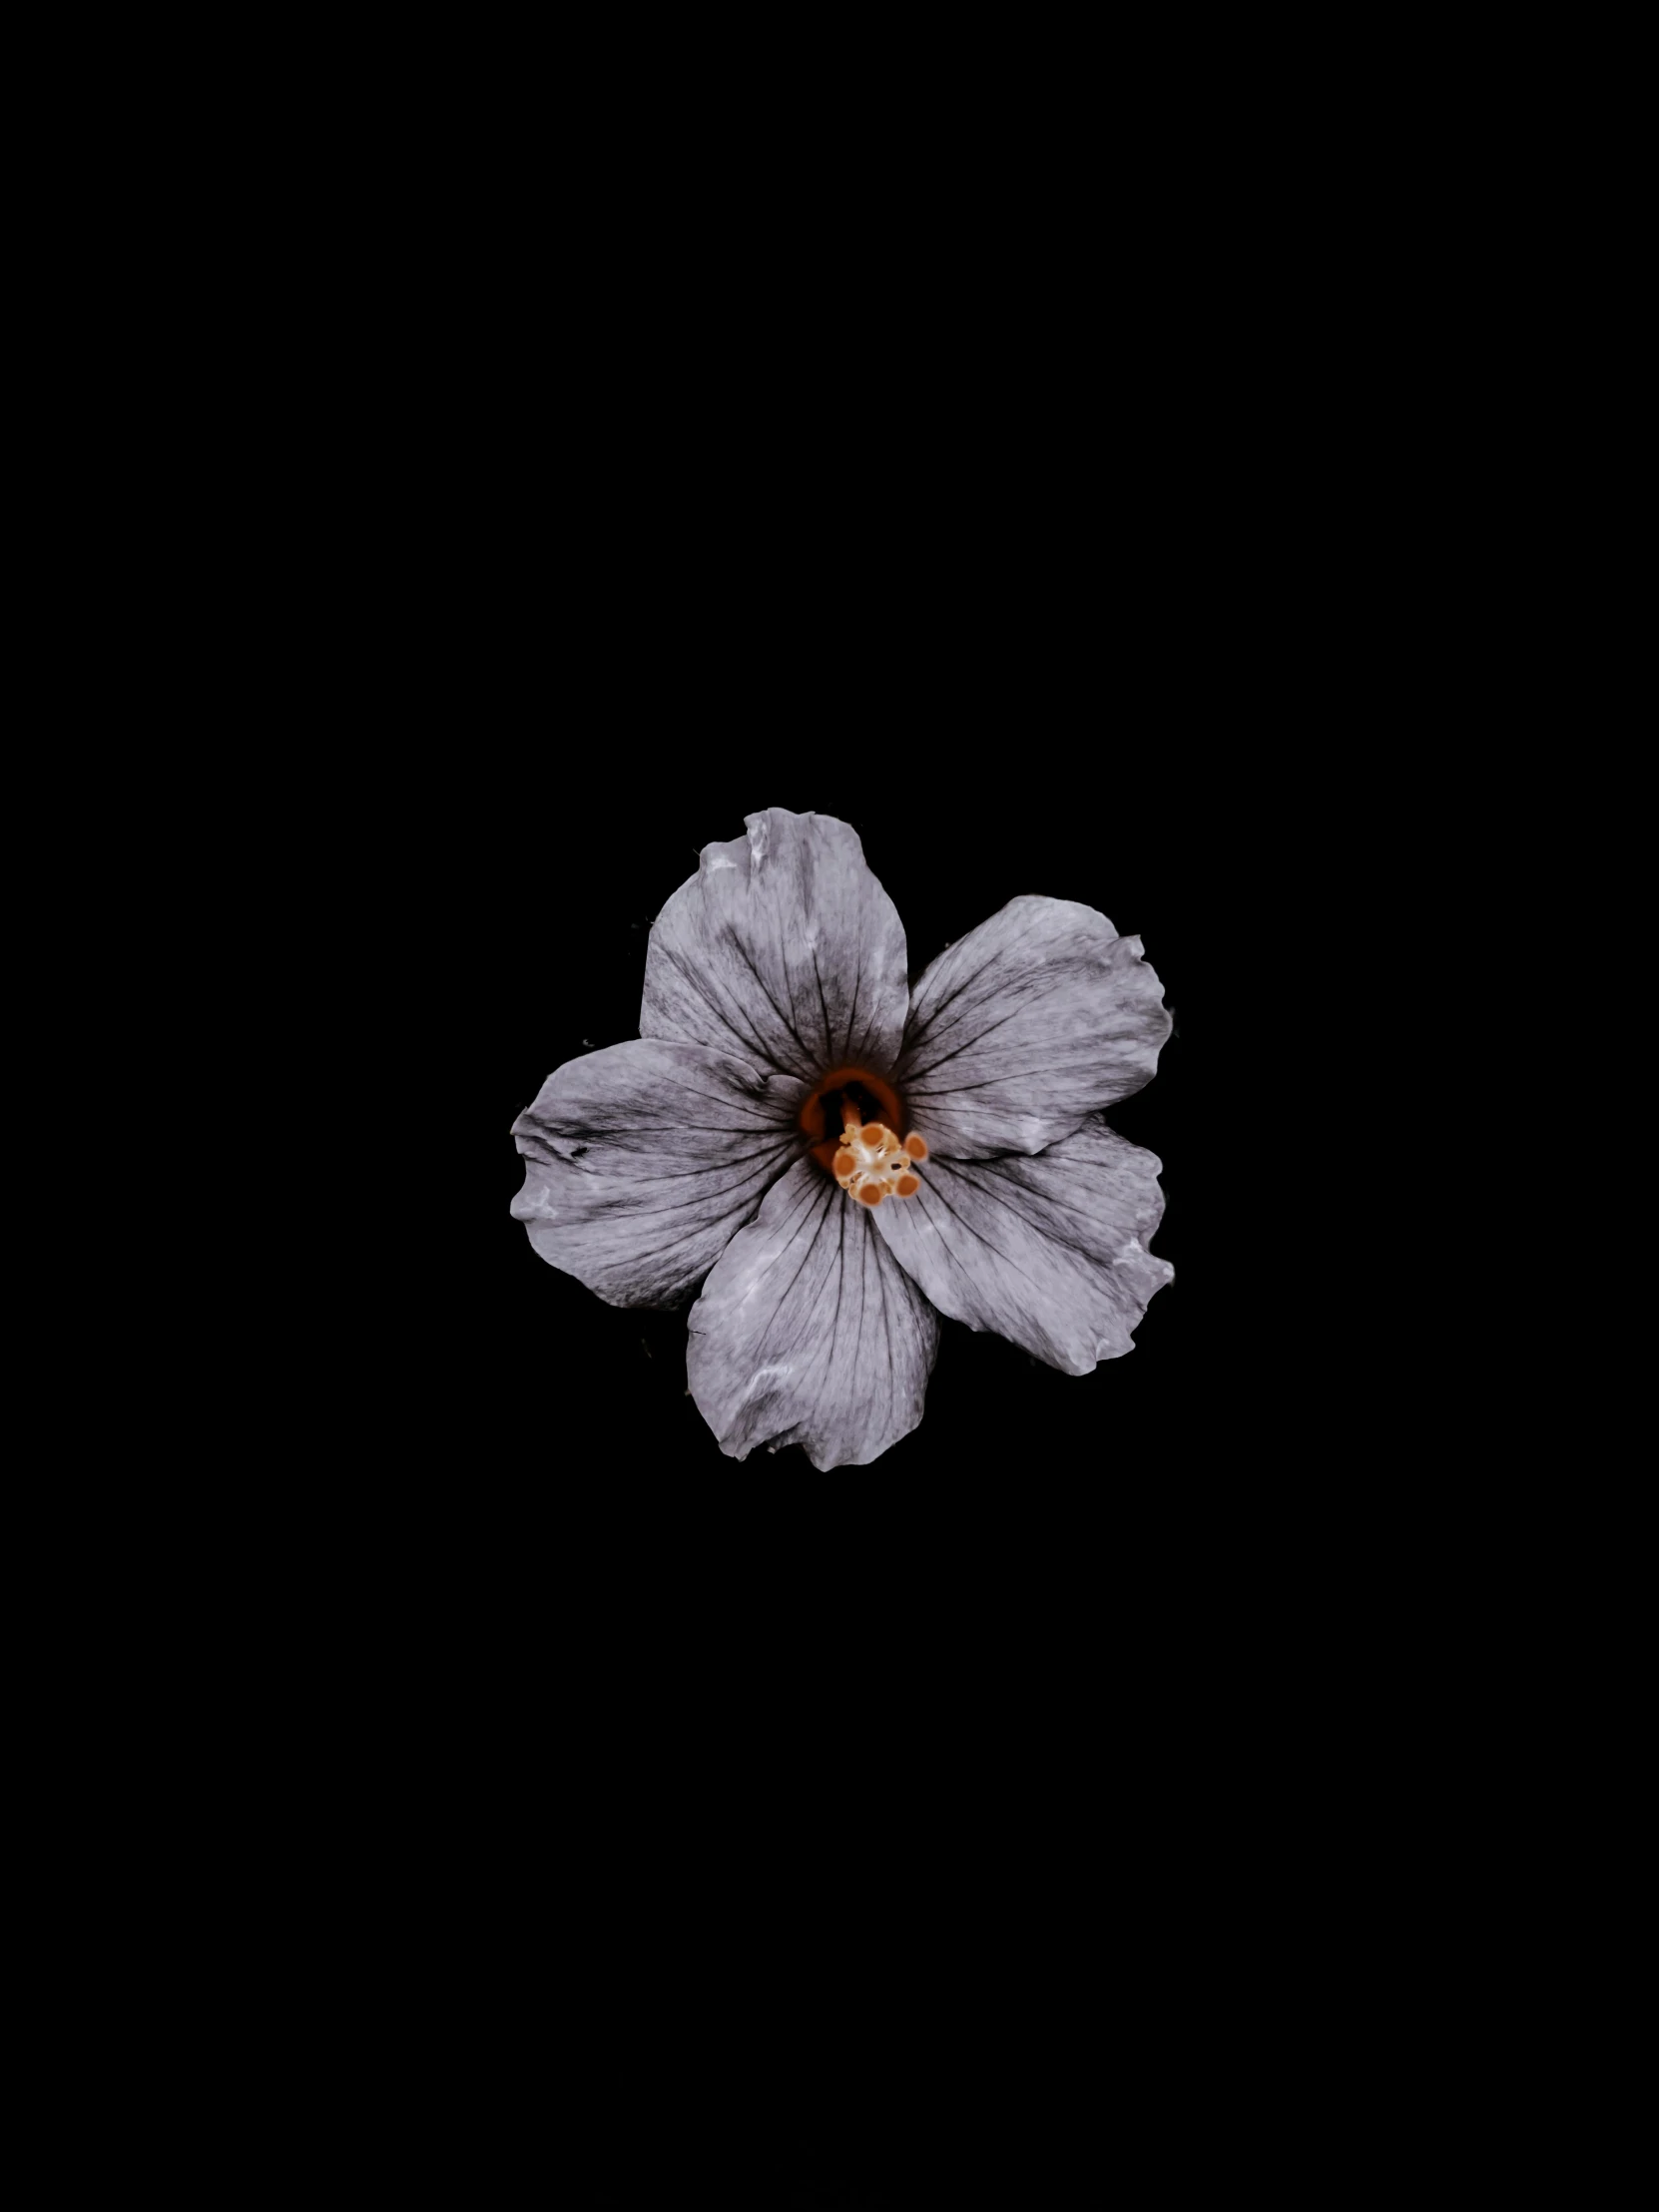 a dark background shows a single white flower